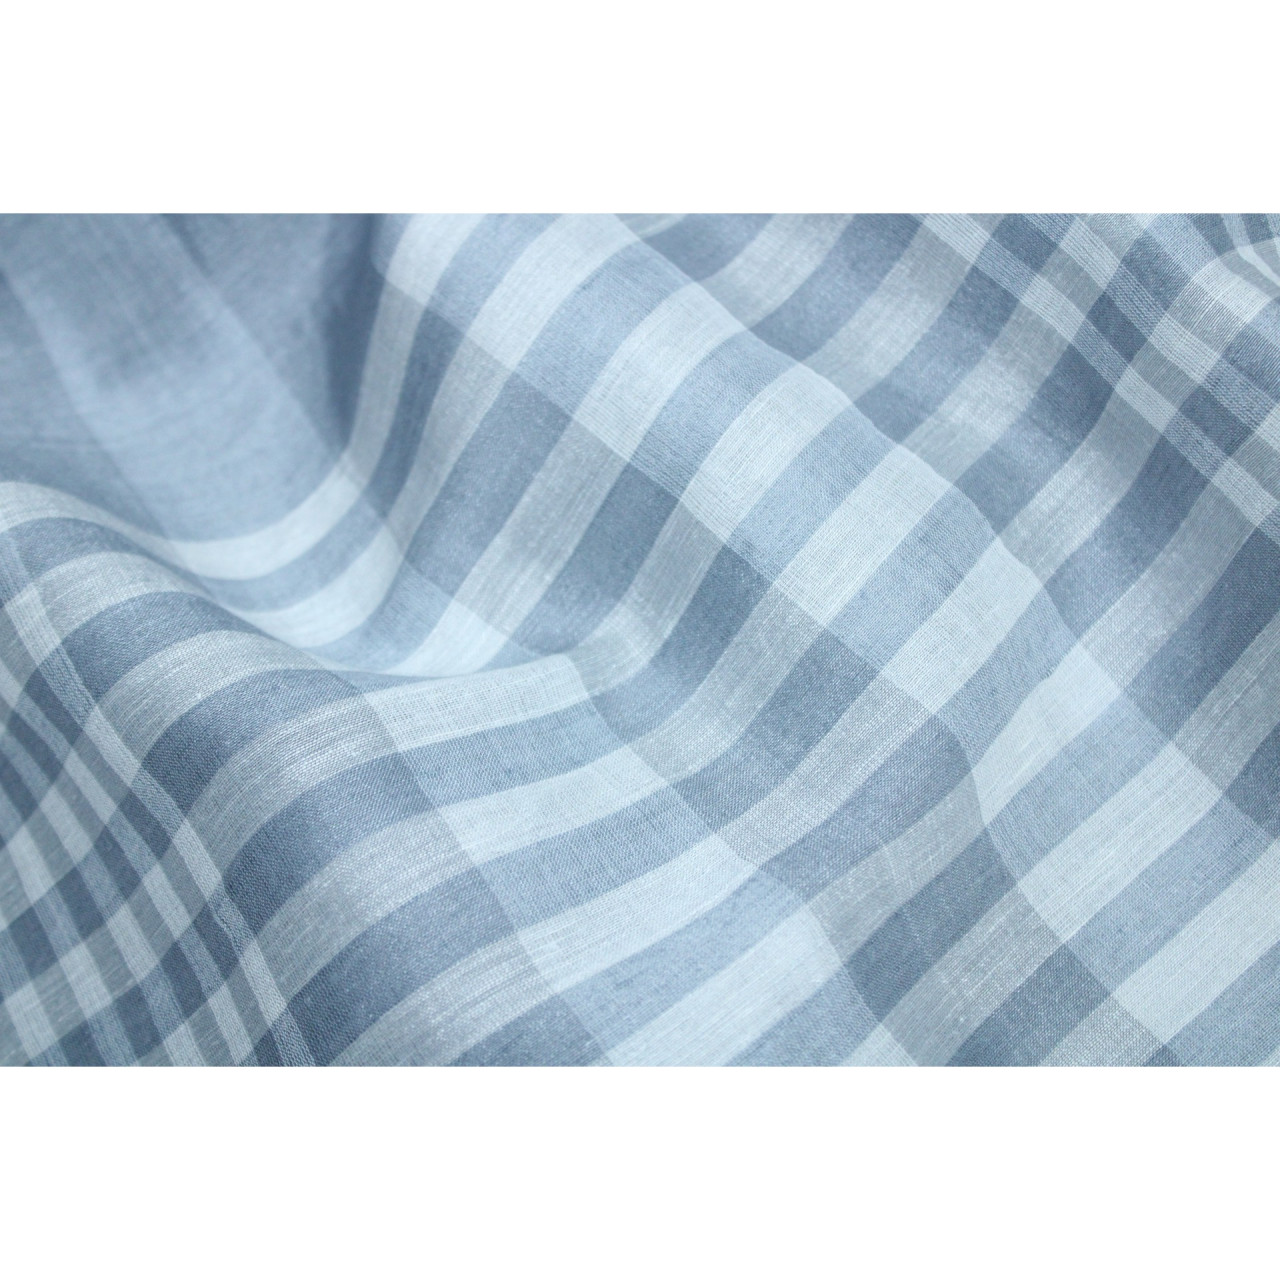 (2156) Khadi  and linen Azo-free dyed stole from Shantipur - Grey, white, stripes, plain